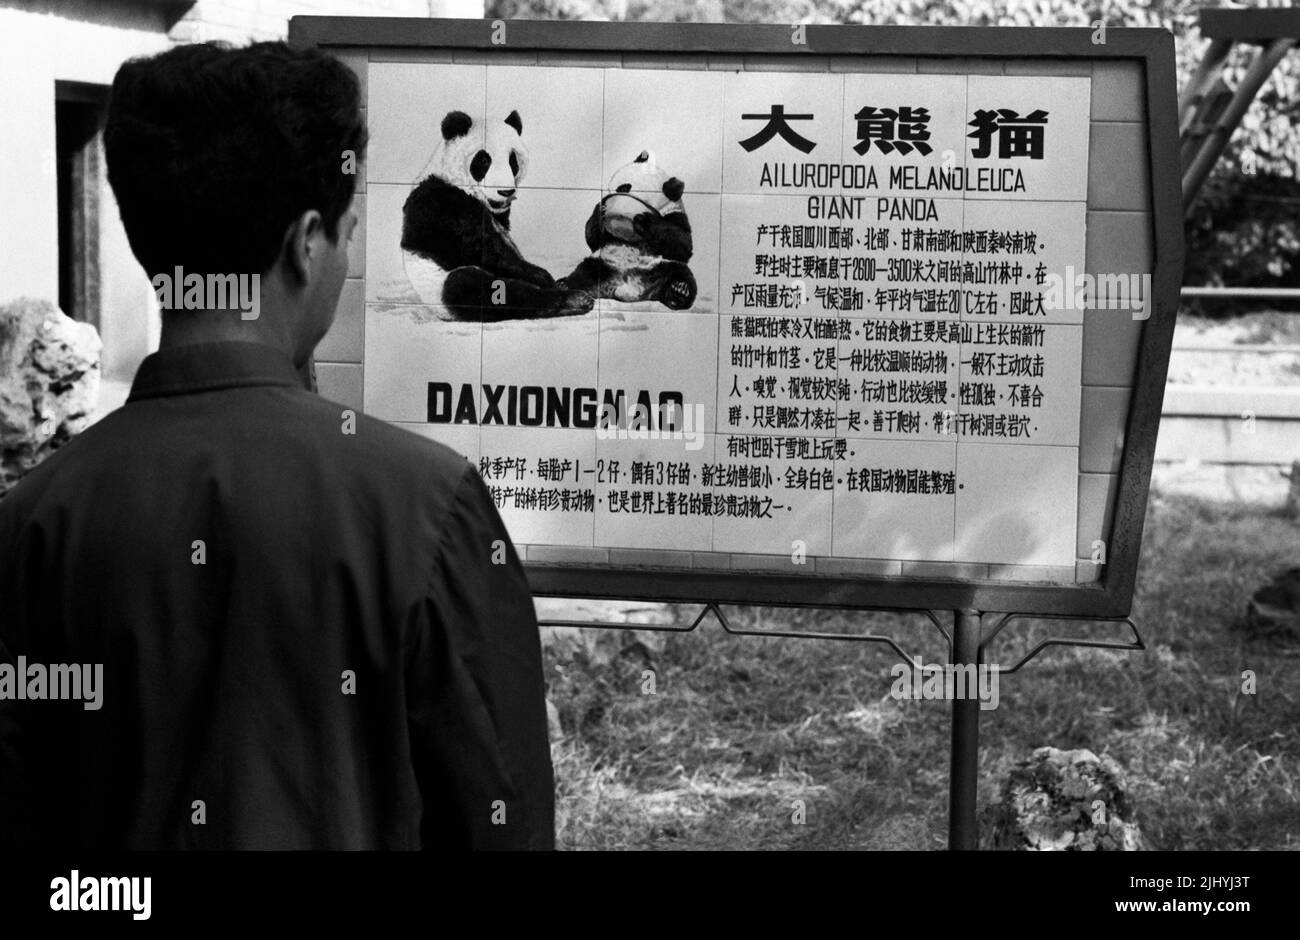 CHINA BEIJING Giant Pandas in zoo Ailuropoda melanoleuca a man reads the information sign Stock Photo